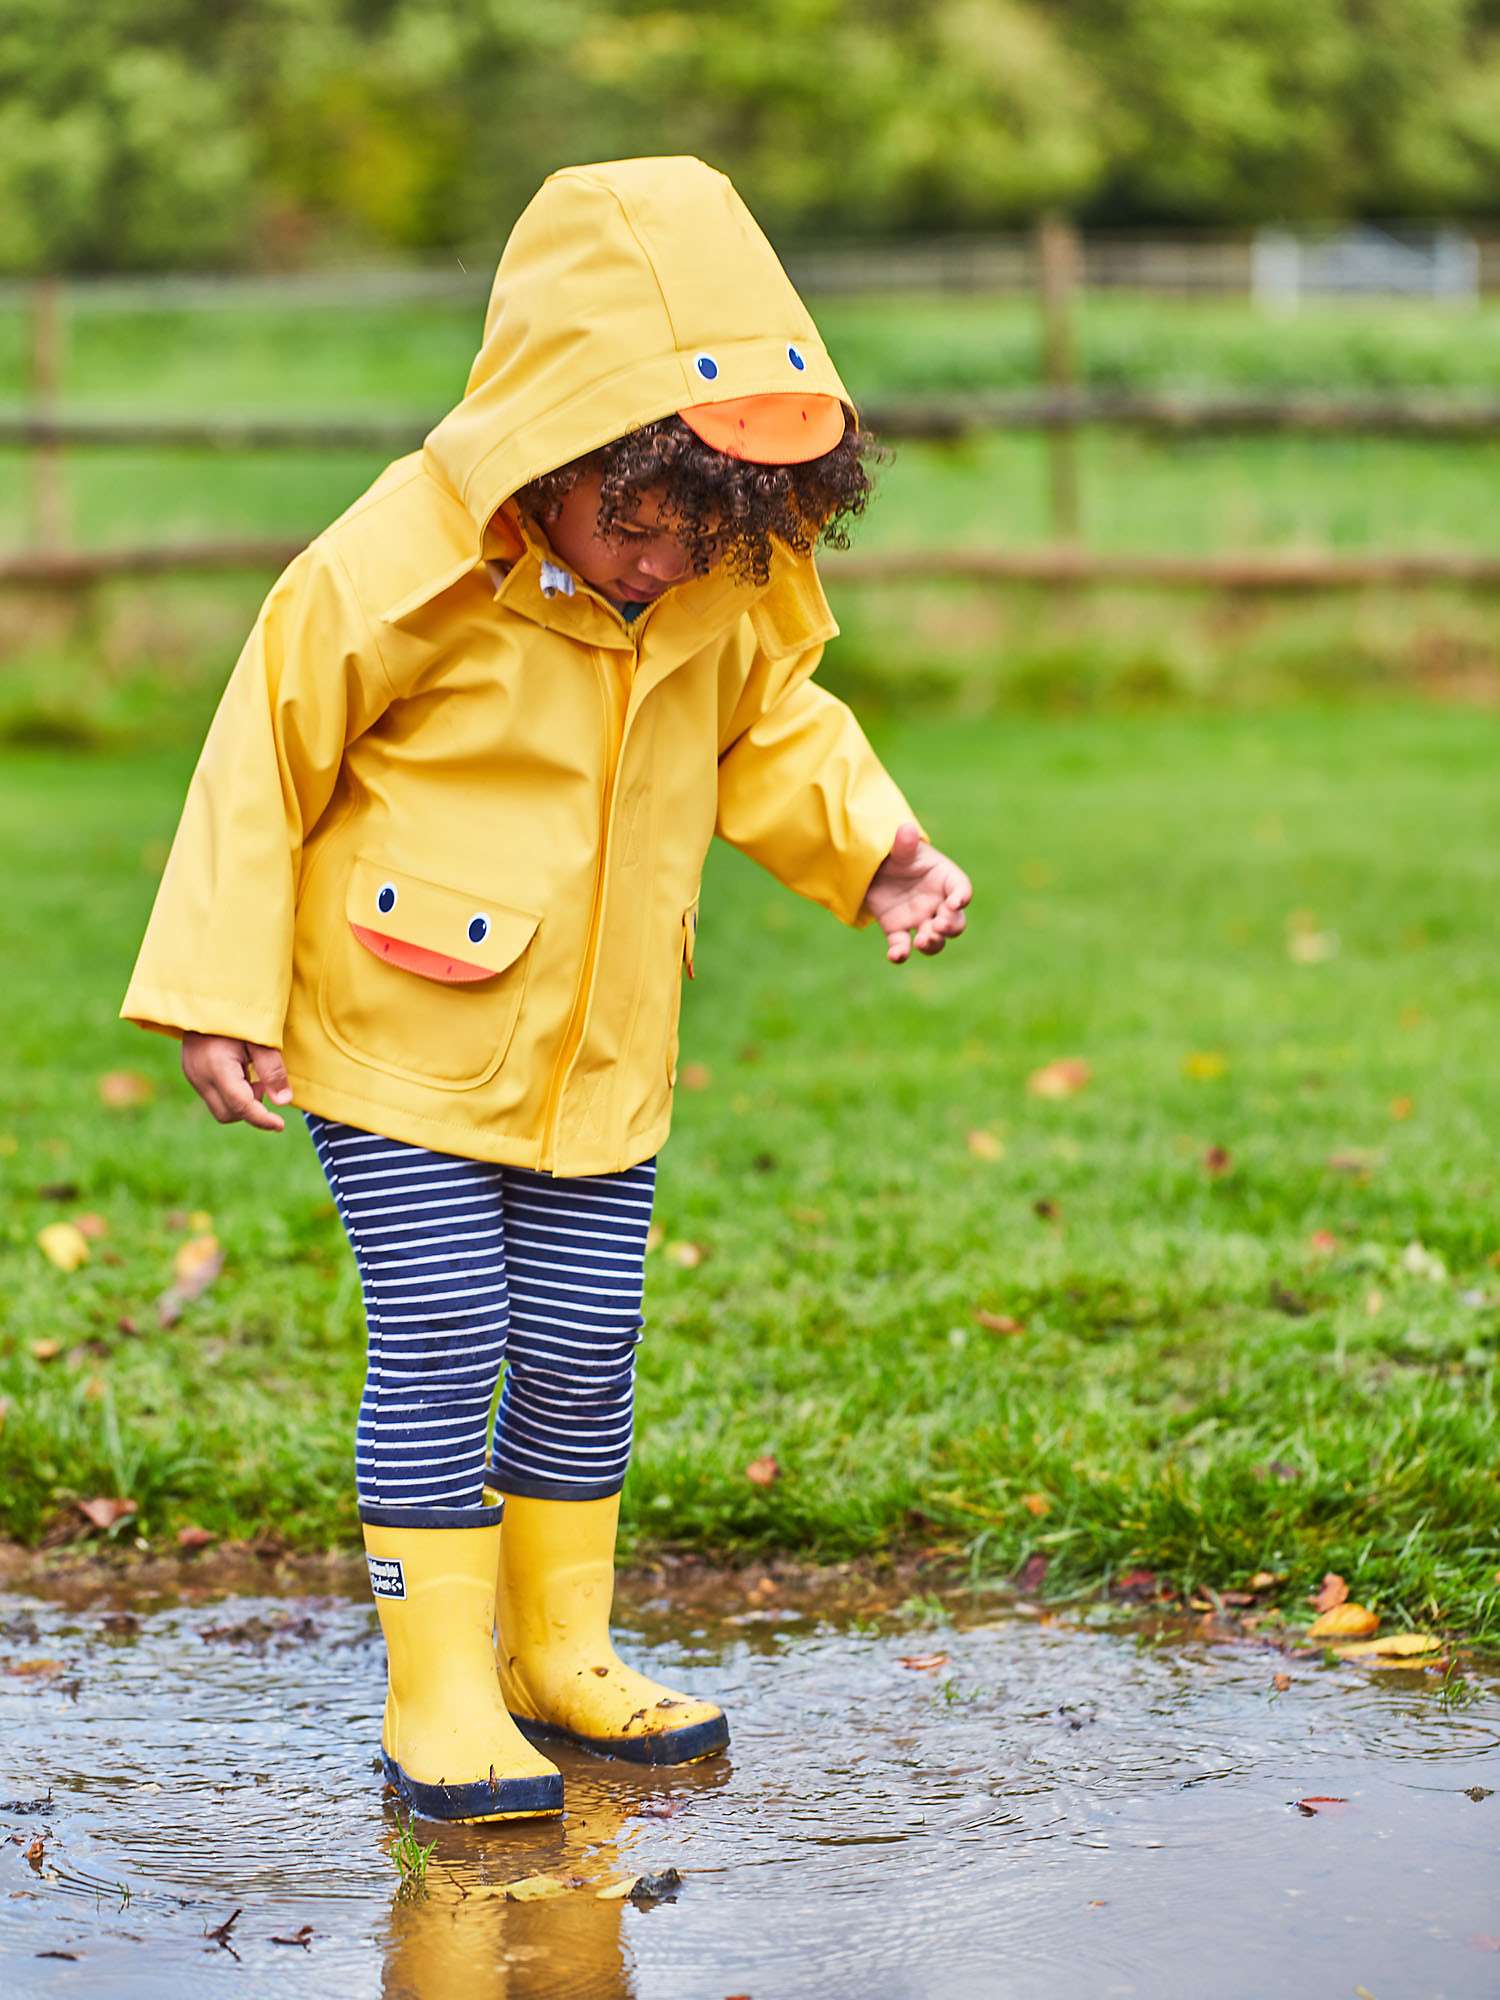 Buy JoJo Maman Bébé Kids' Duck Waterproof Hooded Jacket, Mustard Online at johnlewis.com